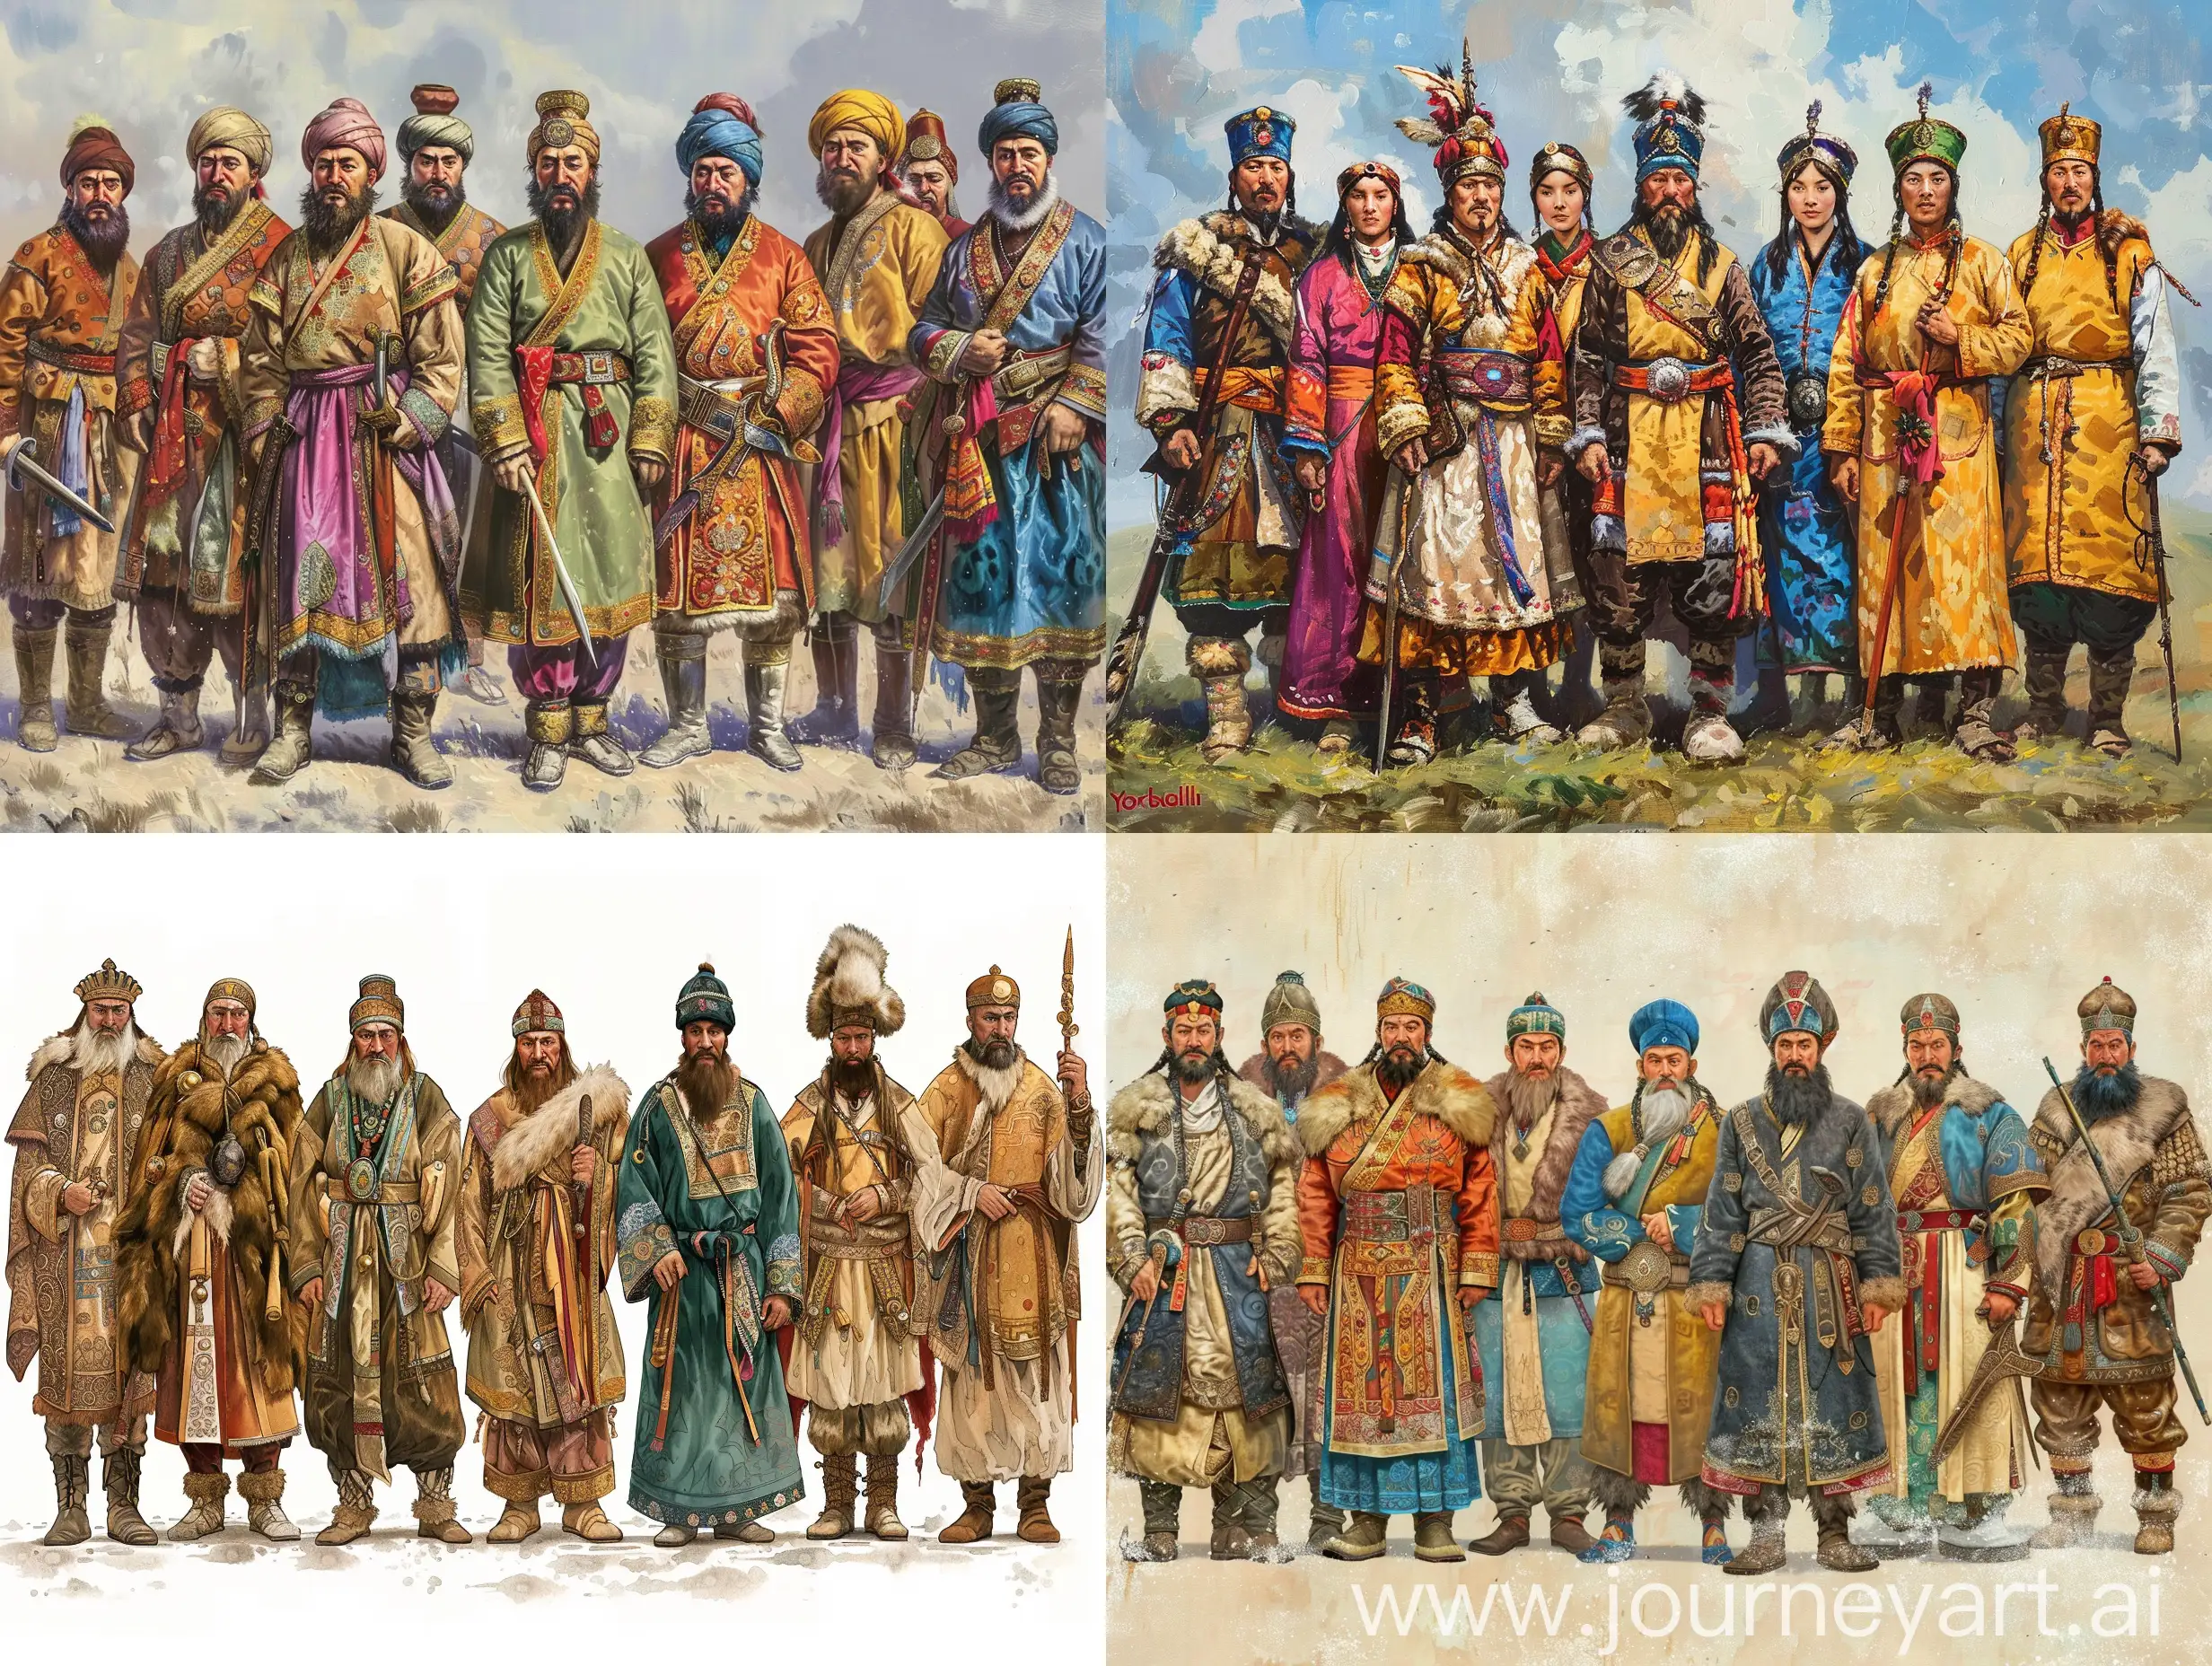 Yoruks were divided into many tribes. Among the last tribes mentioned in the literature are Aksigirli, Ali Efendi, Bahsıs, Cakallar, Coşlu, Qekli, Gacar, Güzelbeyli, Horzum, Karaevli, Karahacılı, Karakoyunlu, Karakayalı, Karalar, Karakeçili, Manavlı, Melemenci, San Agalı, Sanhacılı, Sarıkeçili, Tekeli and Yeni Osmanlı. These tribes are divided into clans or lineages called boy, sülale or oba. High quality, mongolian.